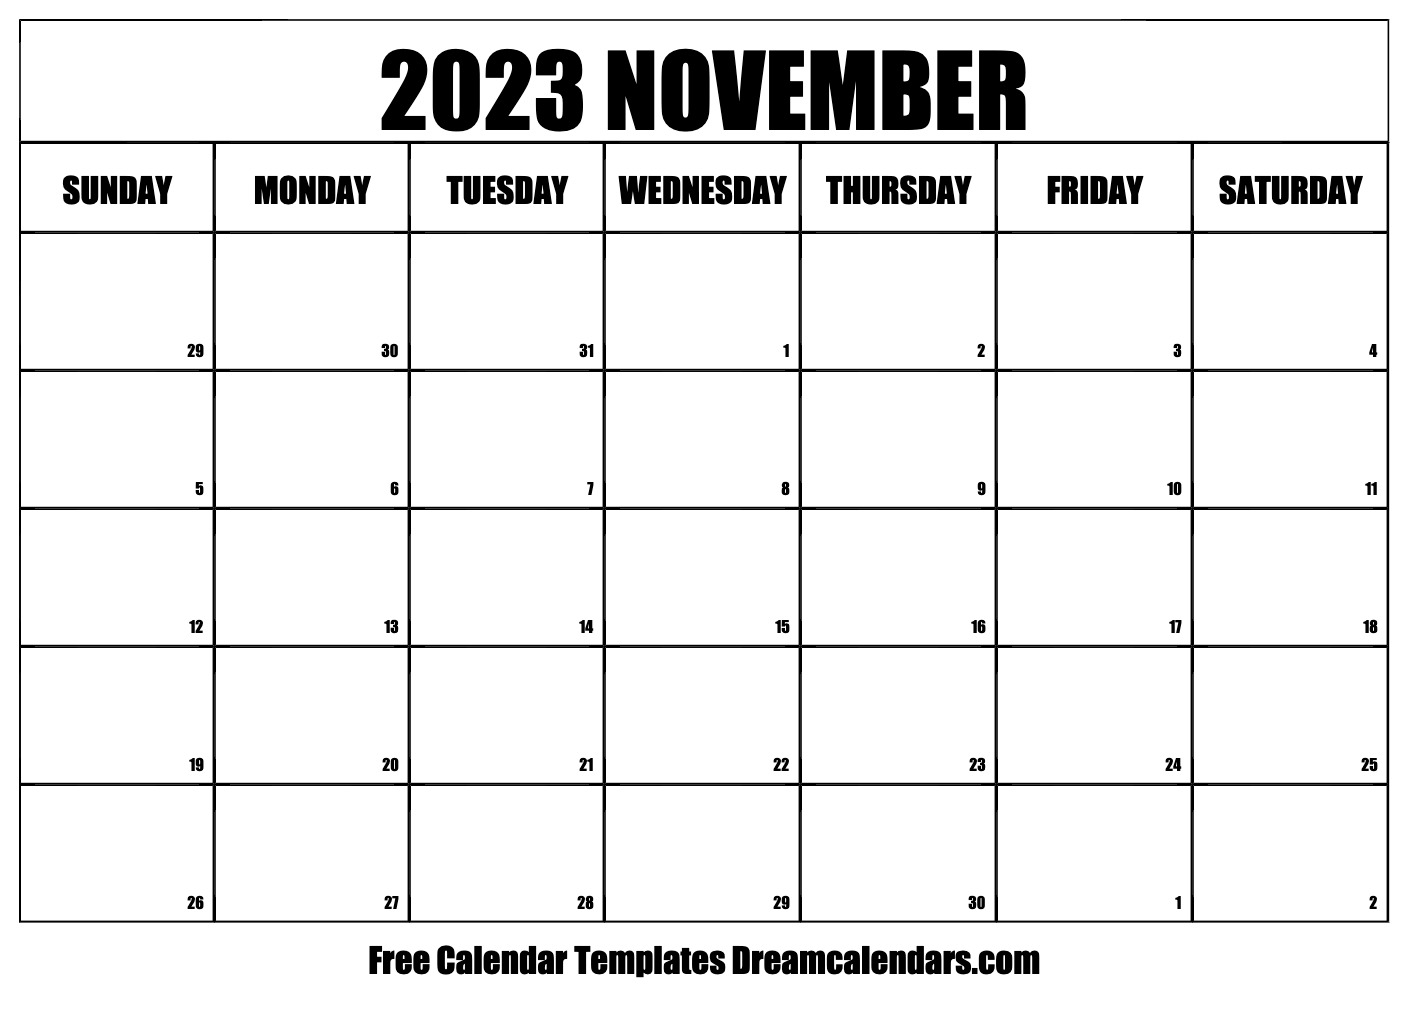 free-printable-nov-2022-calendar-printable-blank-world